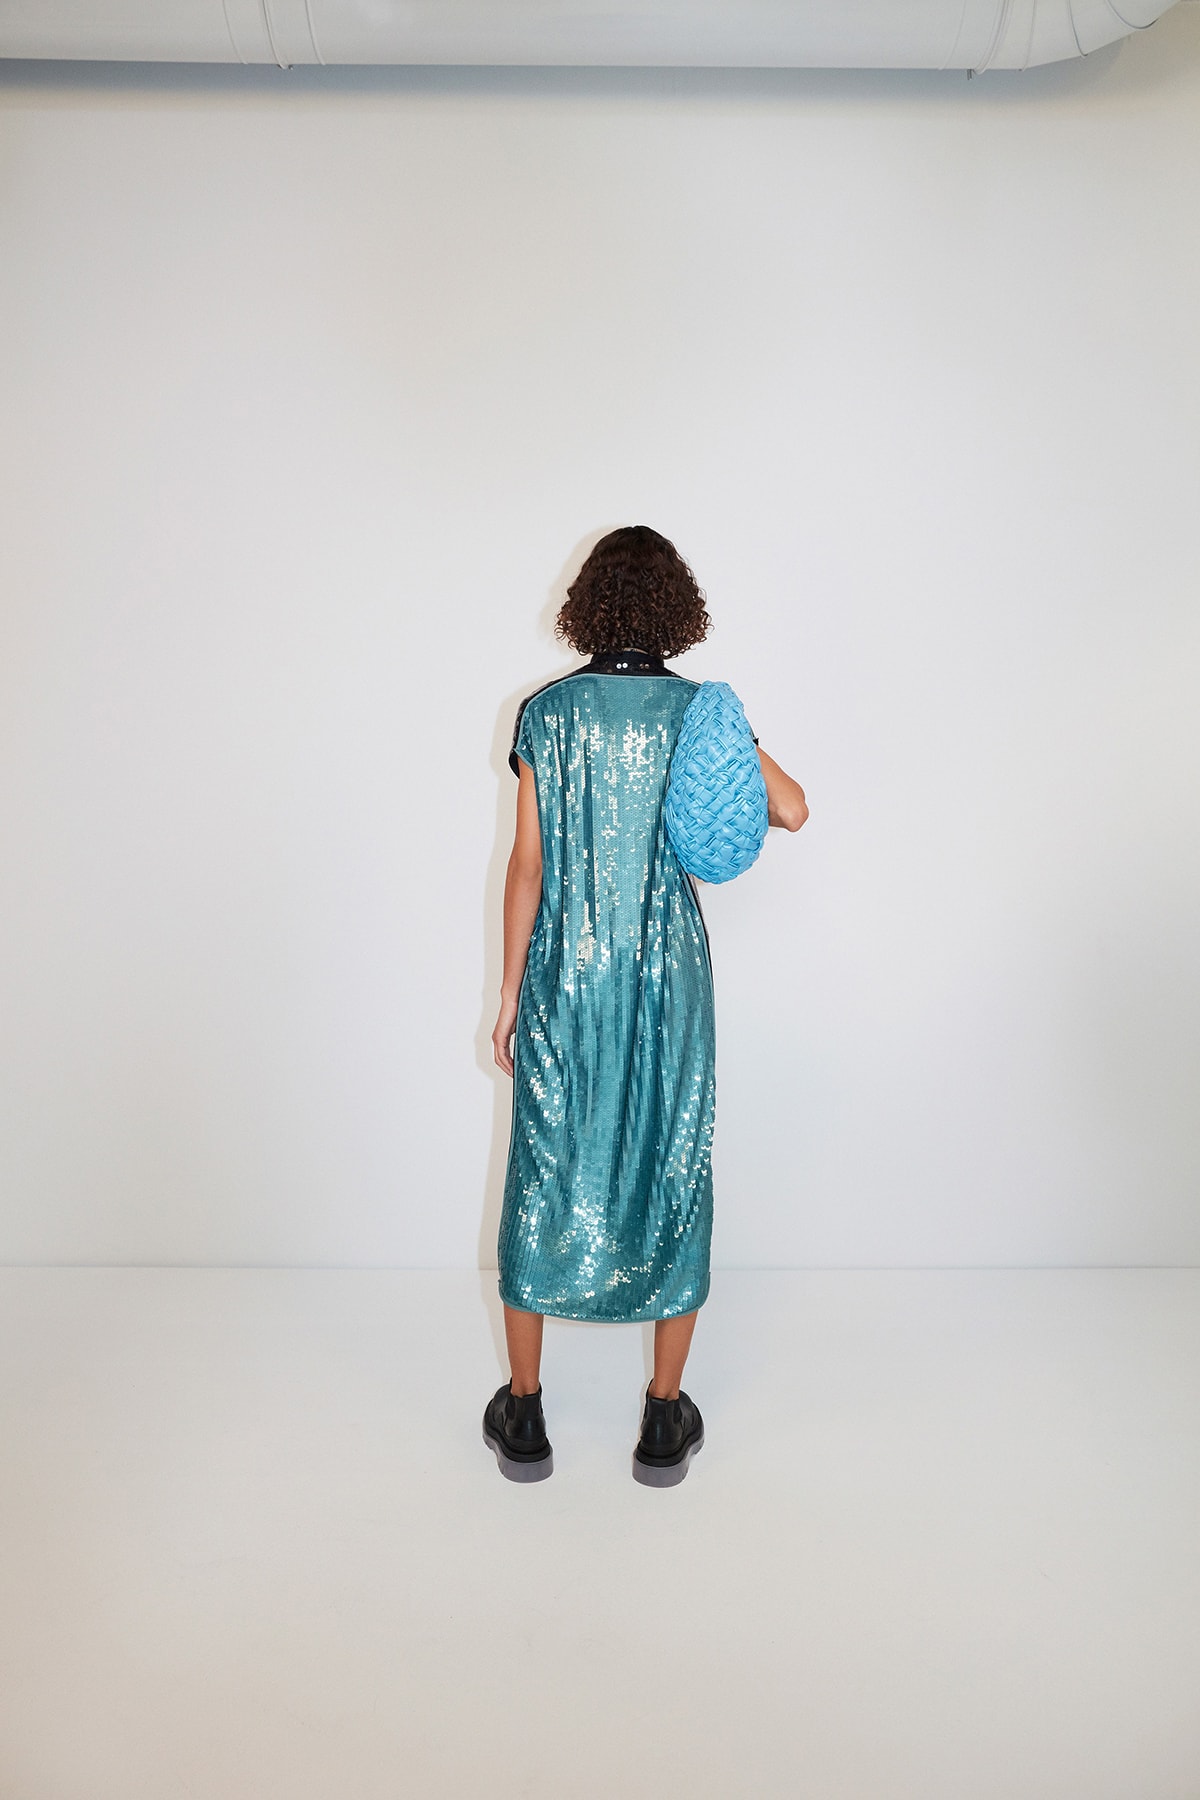 Bottega Veneta Pre-Fall 2020 Collection Lookbook Sequin Dress Blue